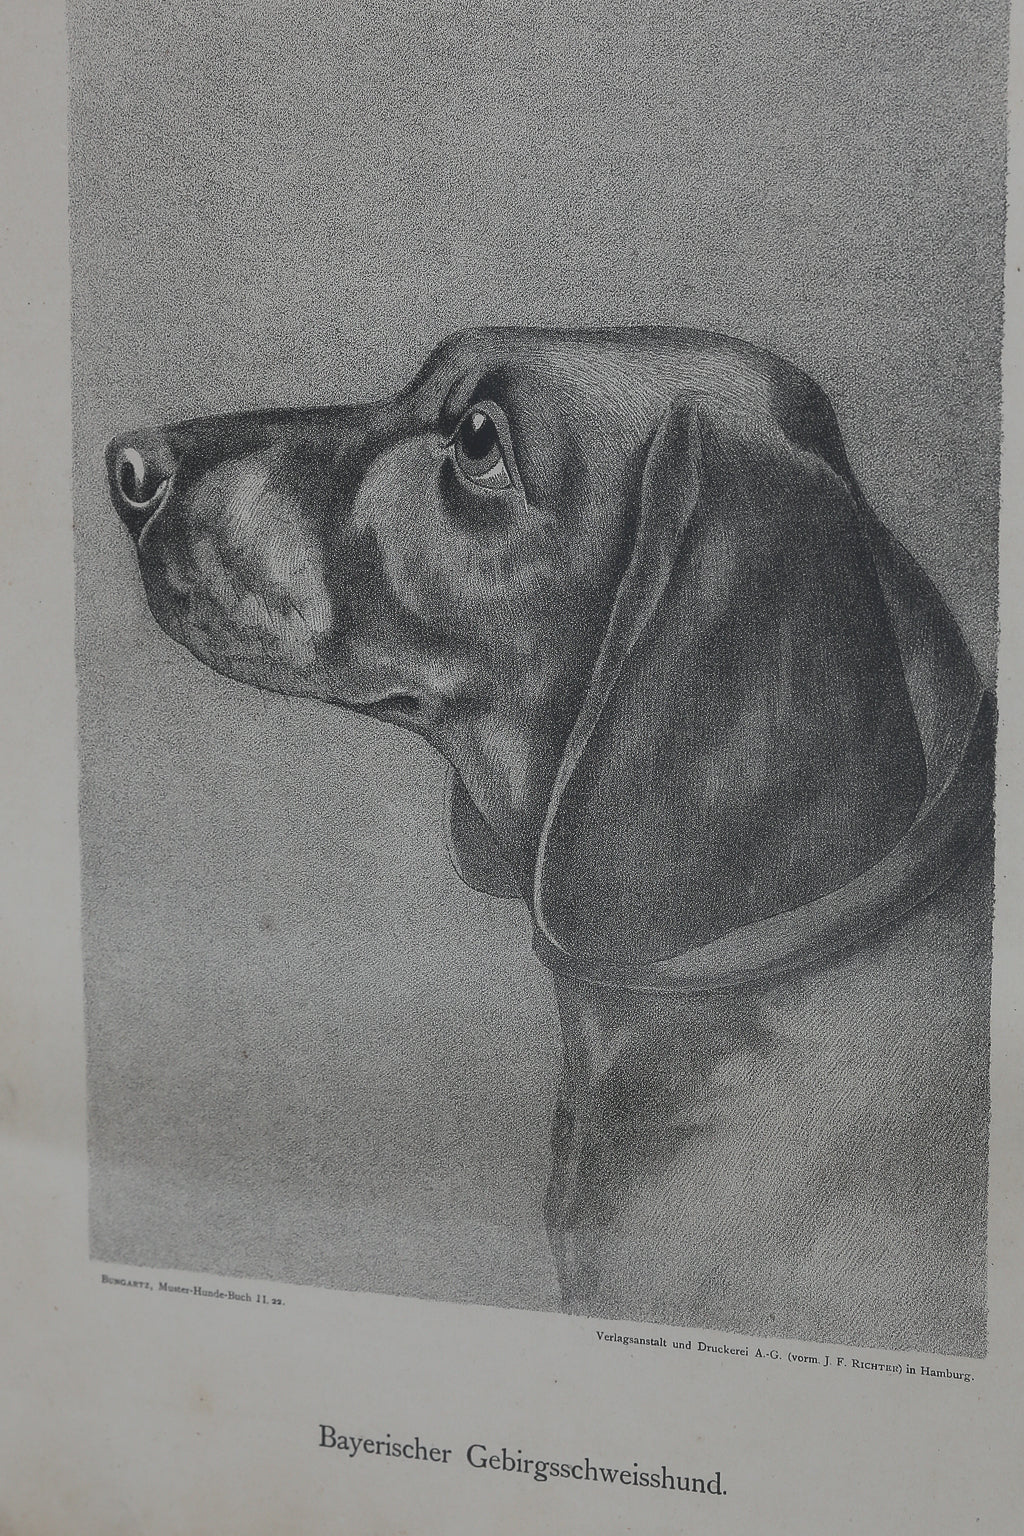 Jean Bungartz Dog Art Head Study Print Set